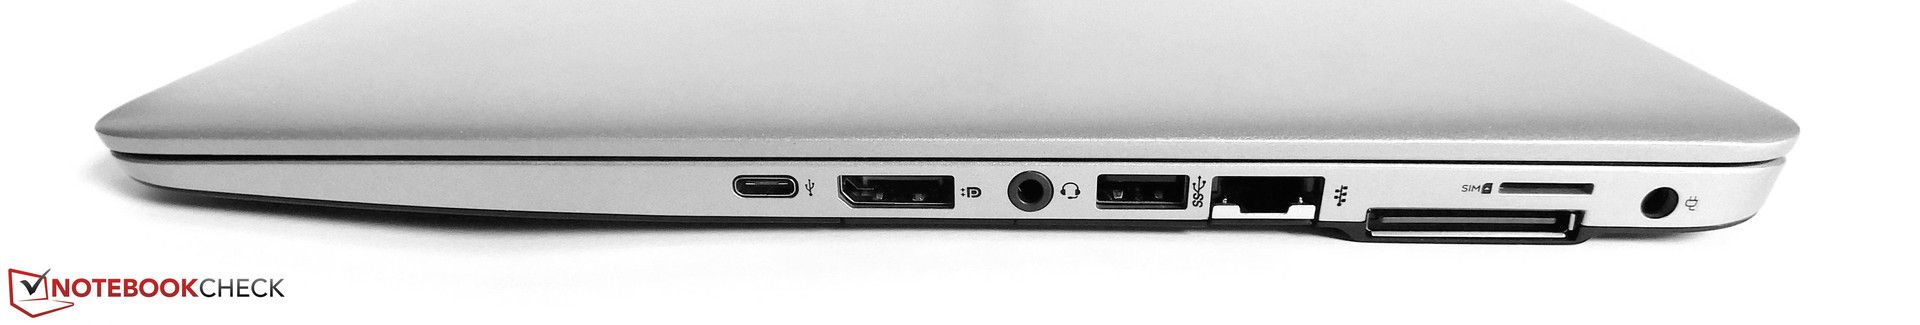 krijgen Aanwezigheid Scepticisme HP EliteBook 850 G4 (Core i5, Full HD) Laptop Review - NotebookCheck.net  Reviews